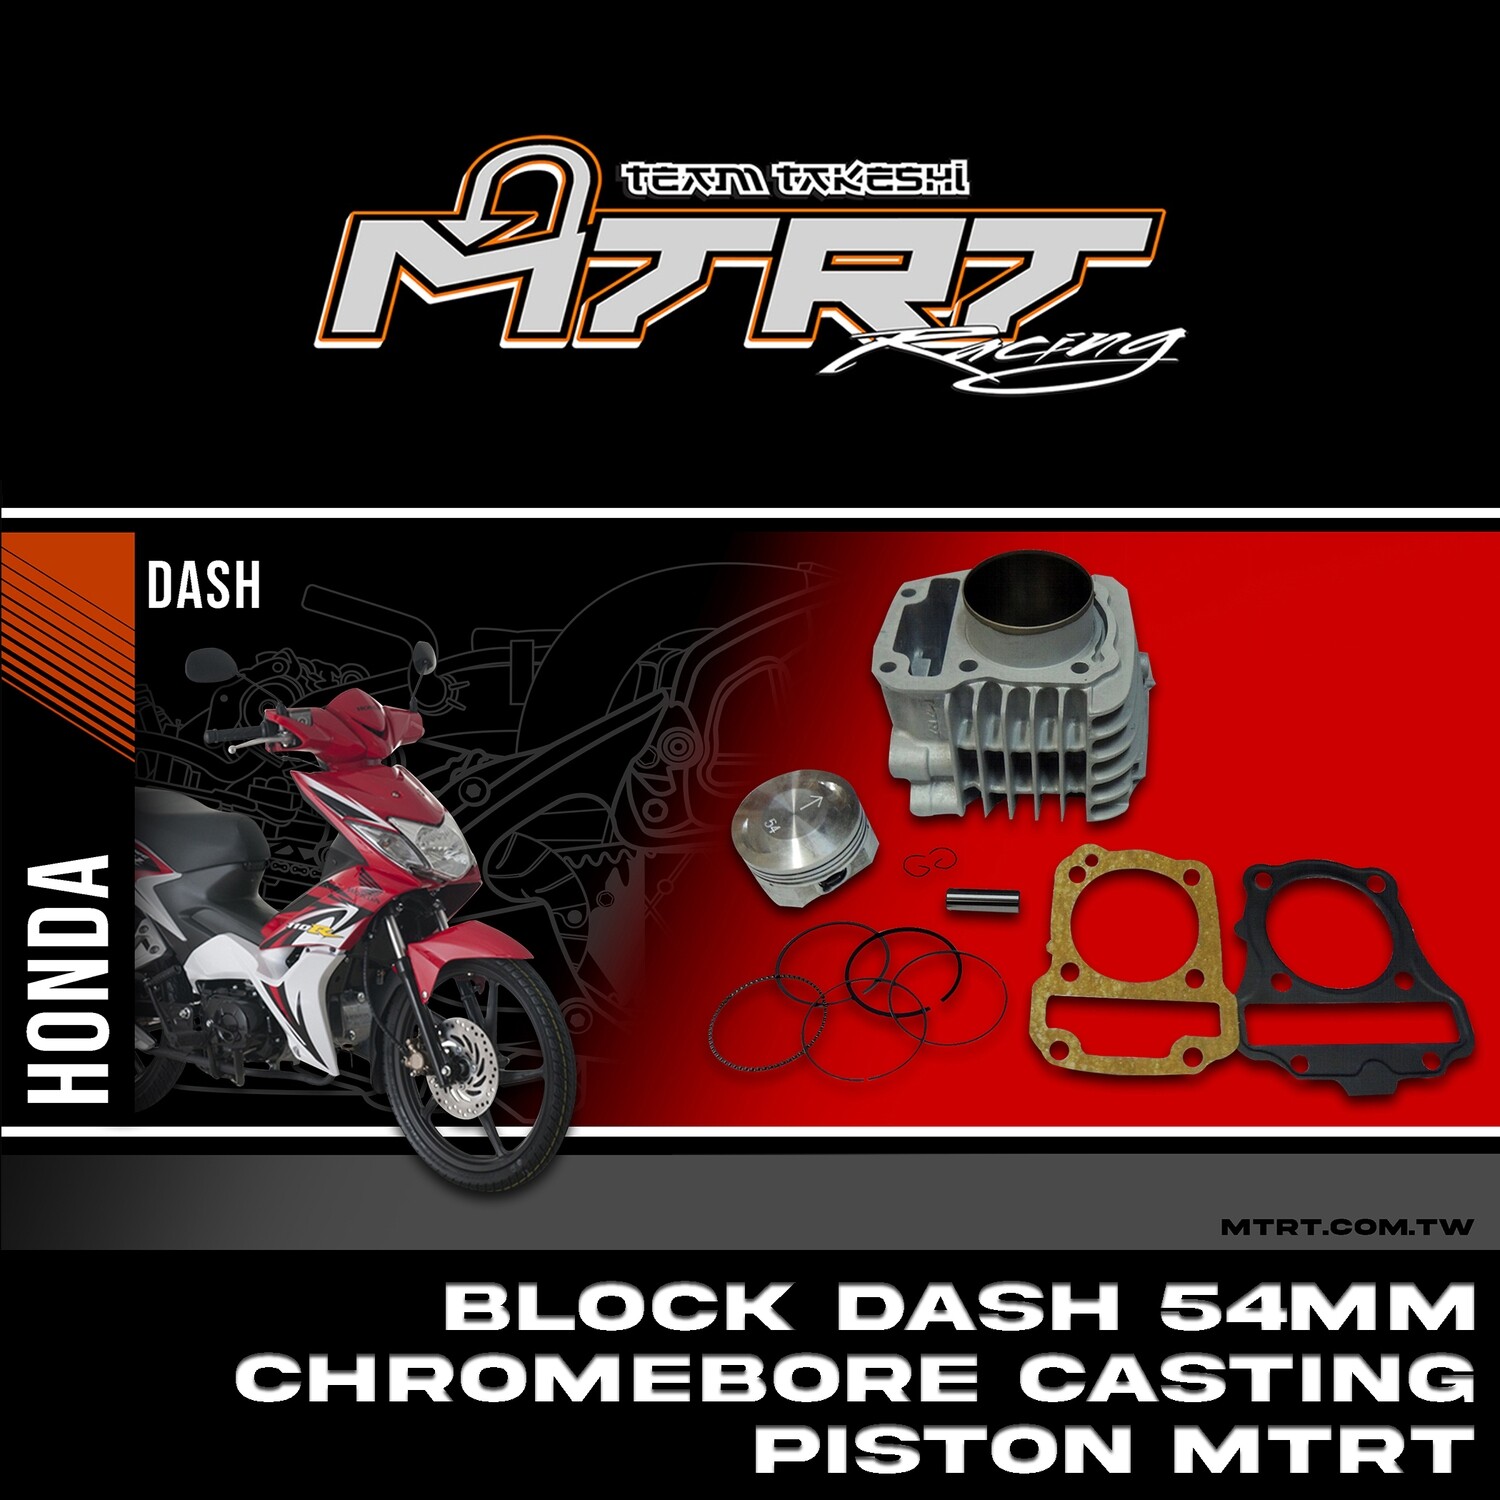 BLOCK DASH 54MM Chromebore Casting piston MTRT